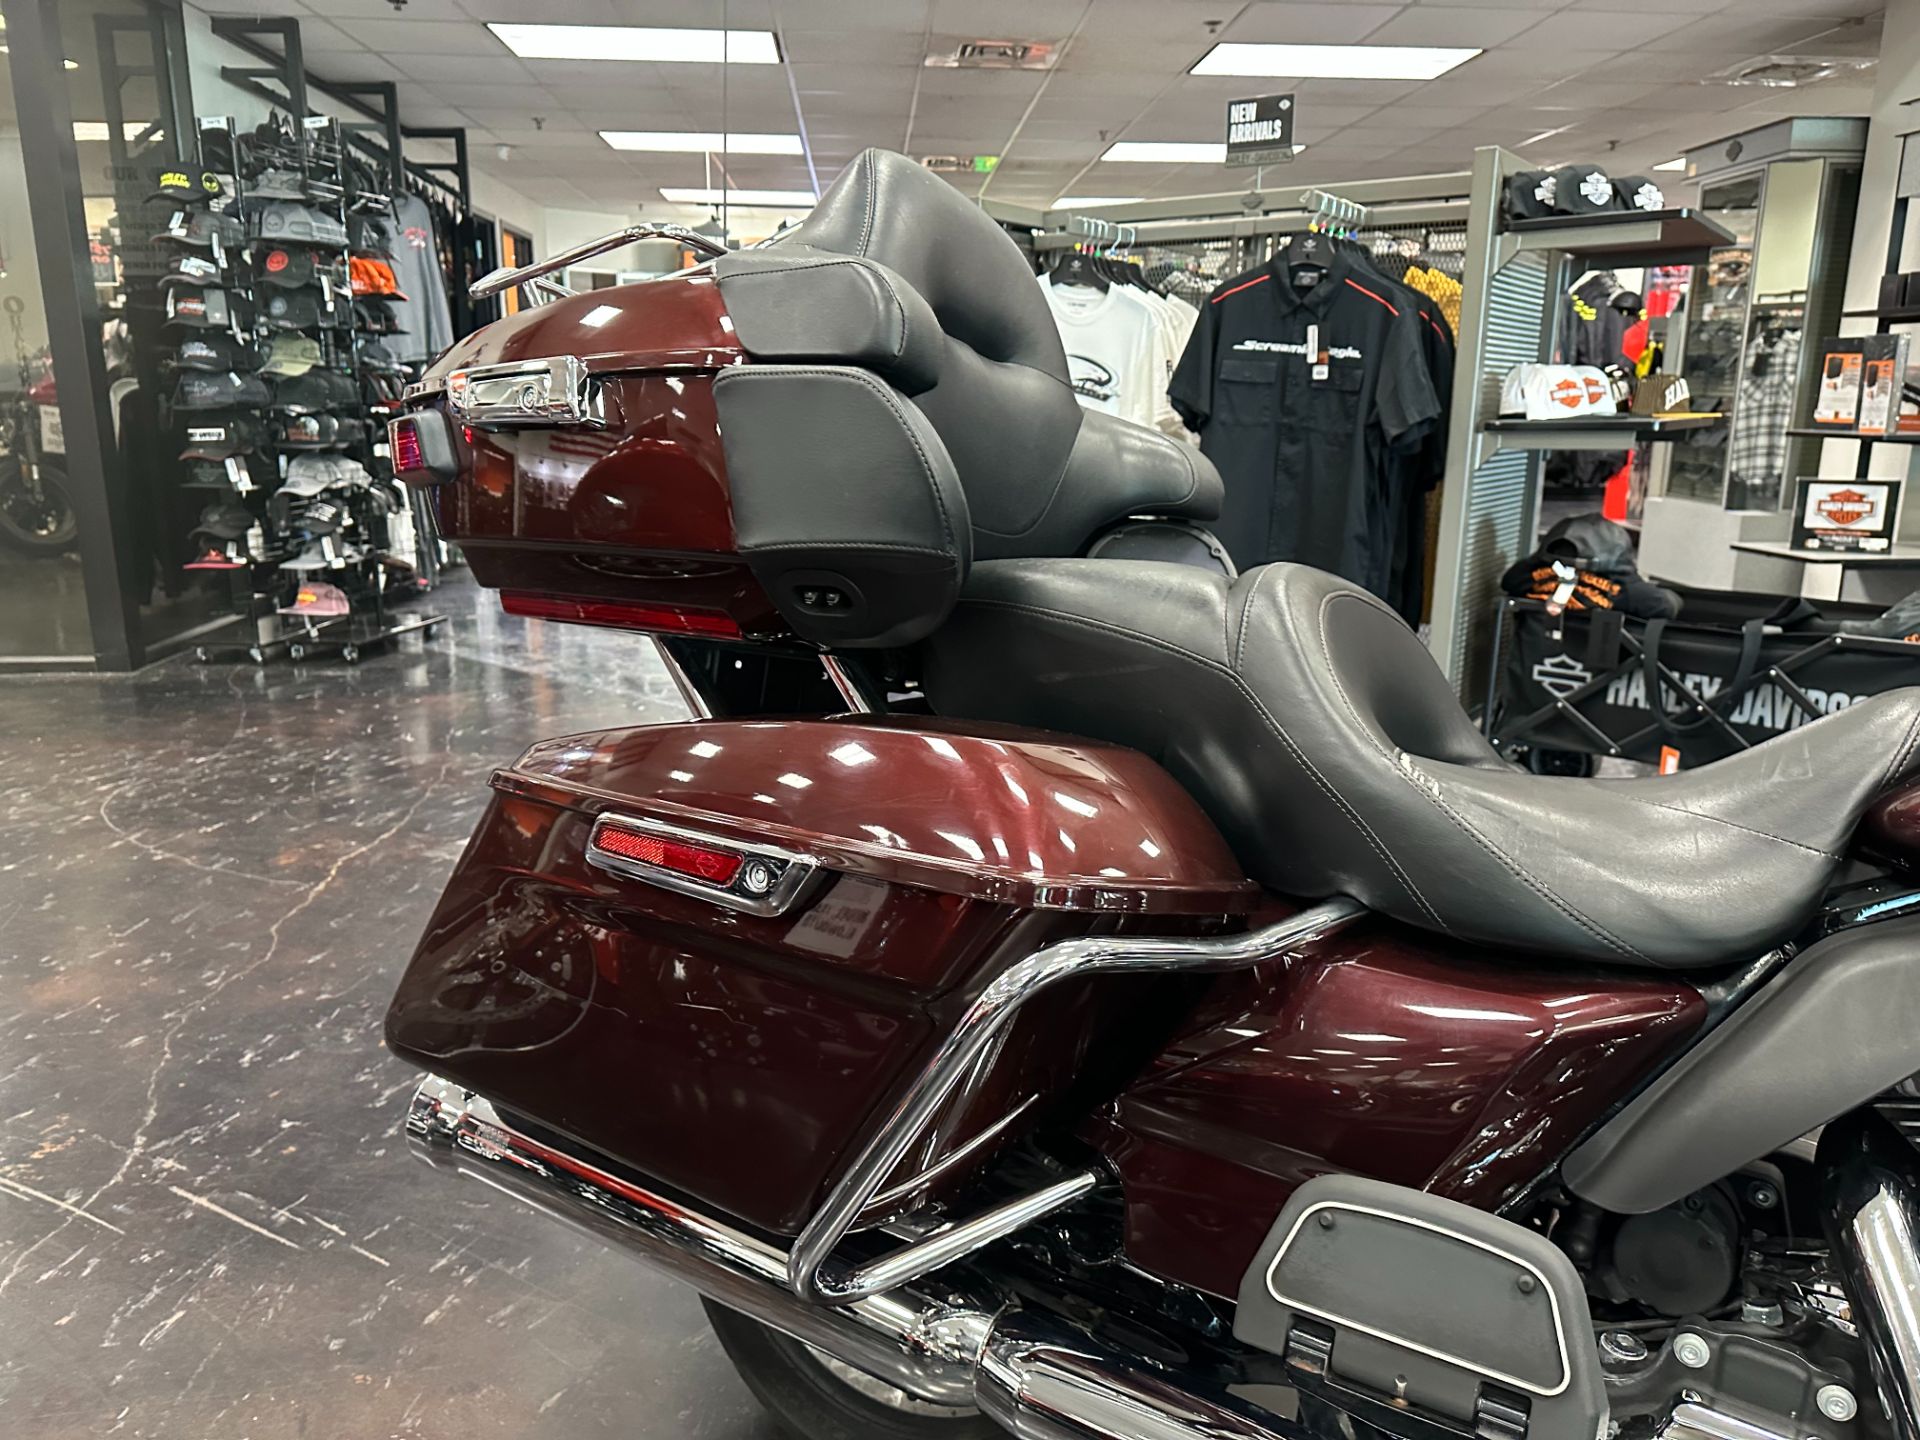 2018 Harley-Davidson Ultra Limited in Metairie, Louisiana - Photo 10